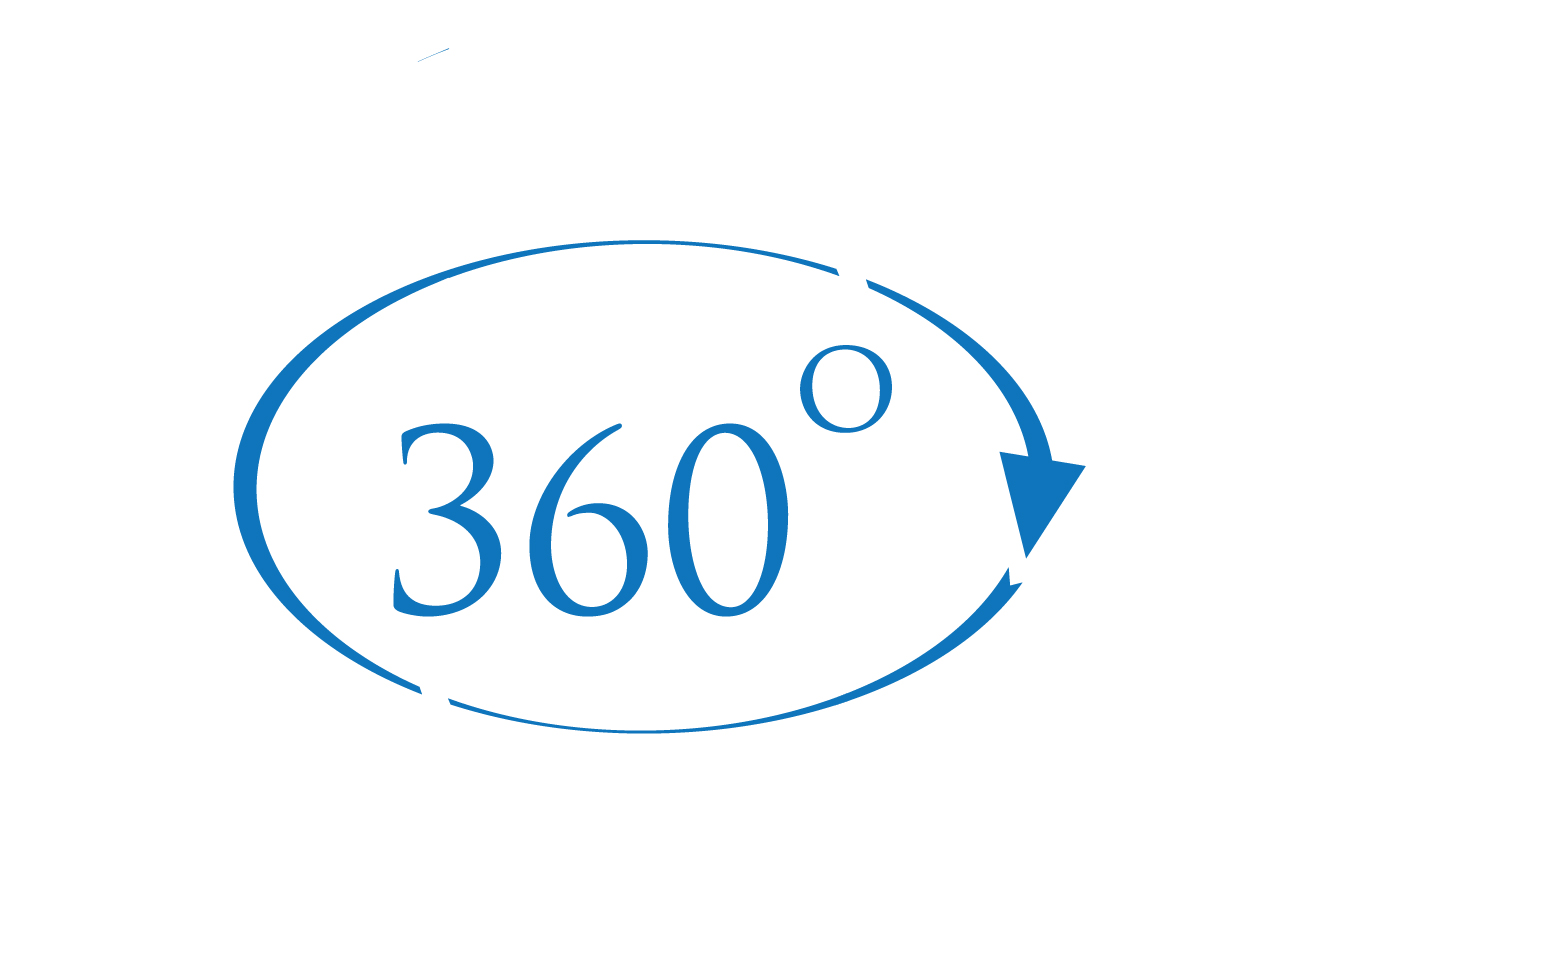 360 degree angle rotation icon symbol logo version v35